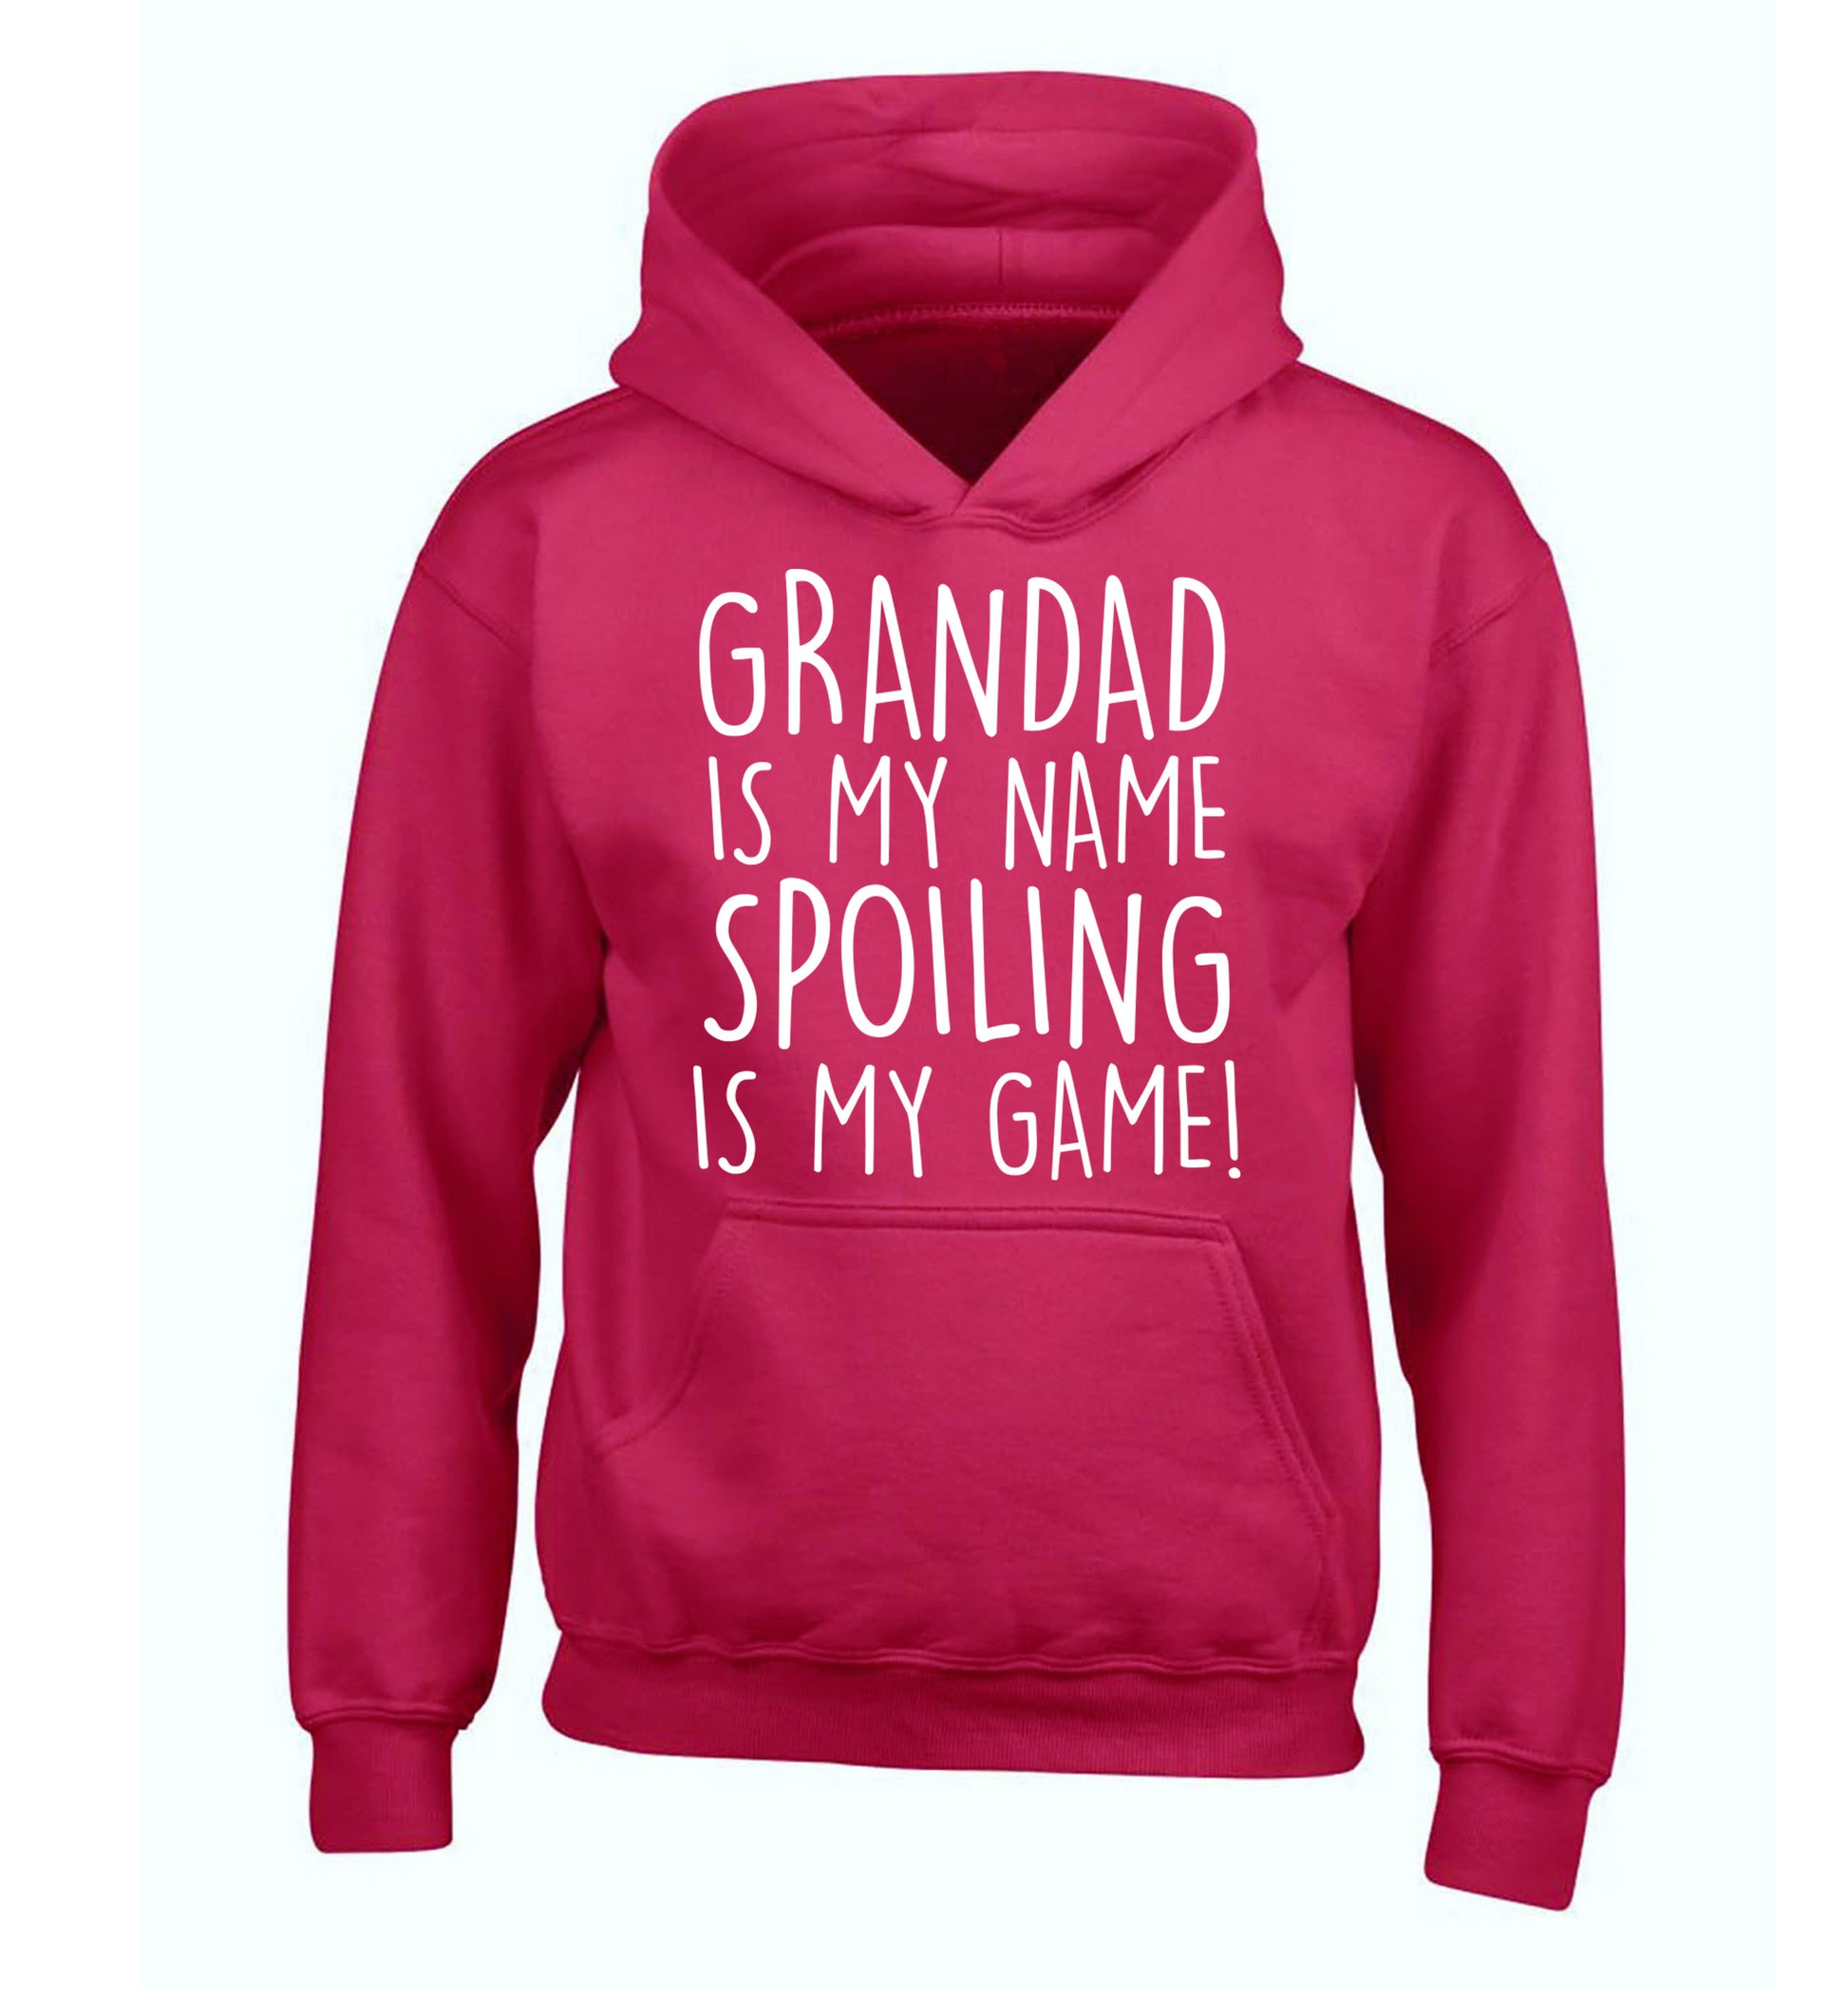 Grandad is my name, spoiling is my game children's pink hoodie 12-14 Years